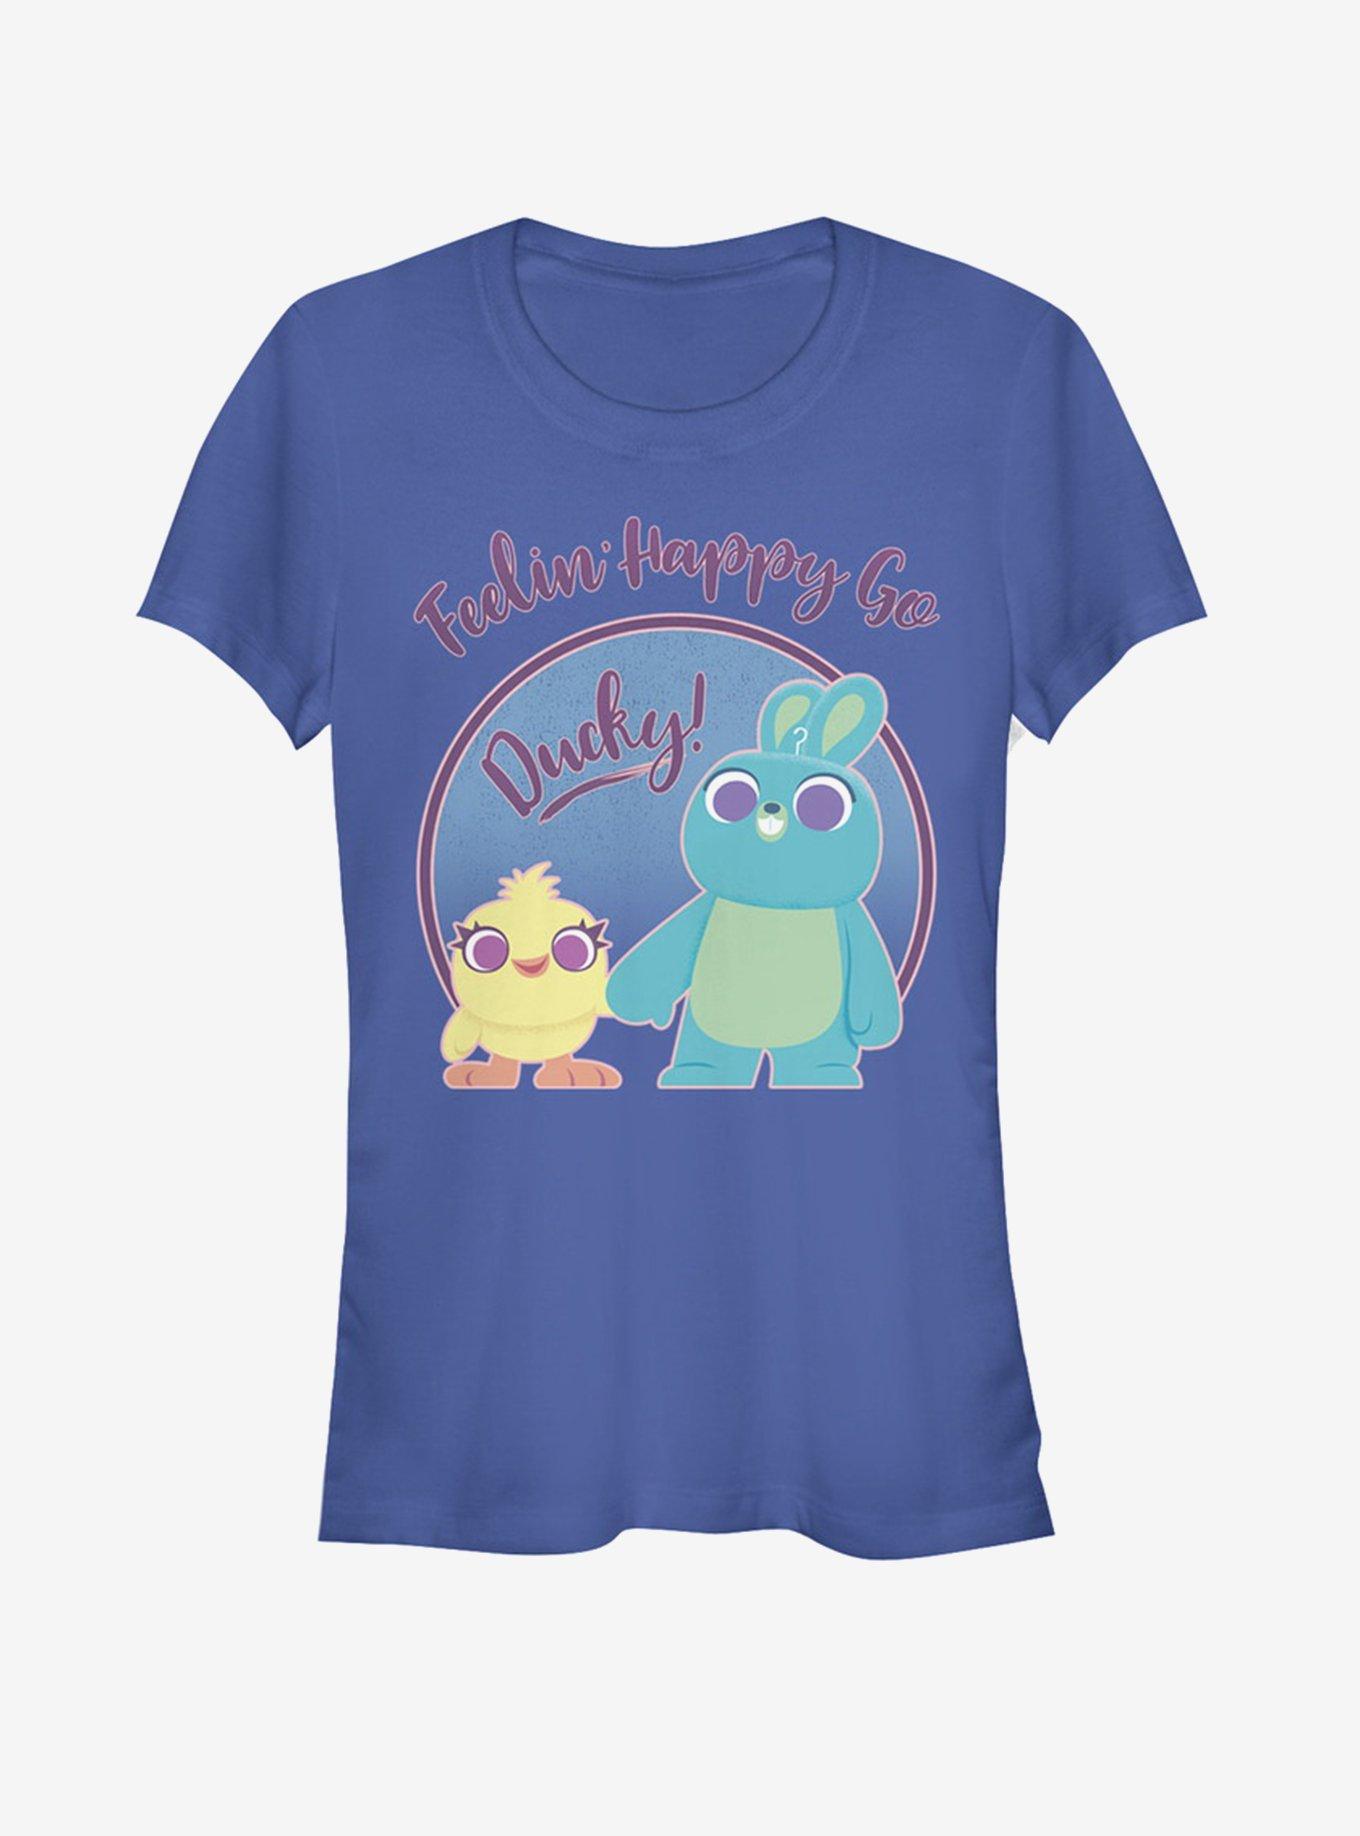 Disney Pixar Toy Story 4 Ducky Bunny Pastel Girls Royal Blue T-Shirt